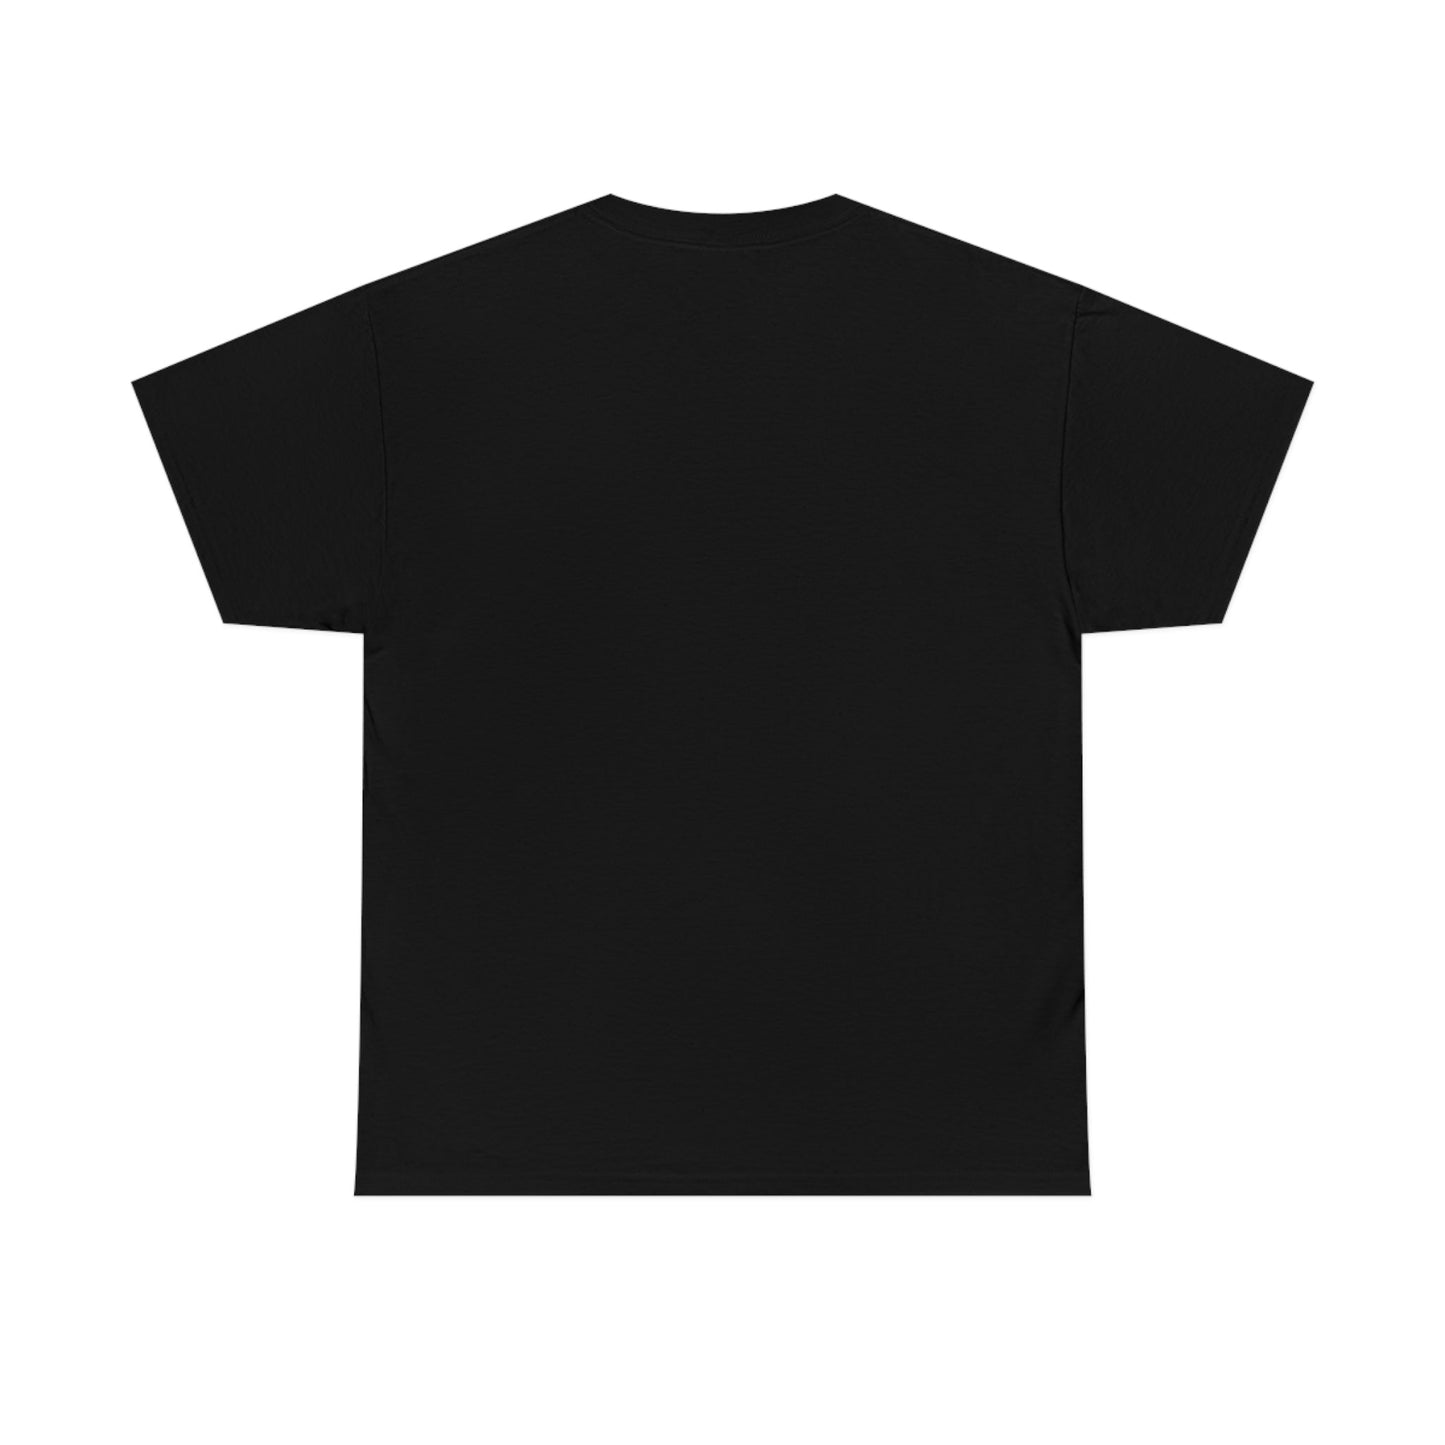 Golden Girls Black T-Shirts | Printed Black Tee | RetroTeeShop